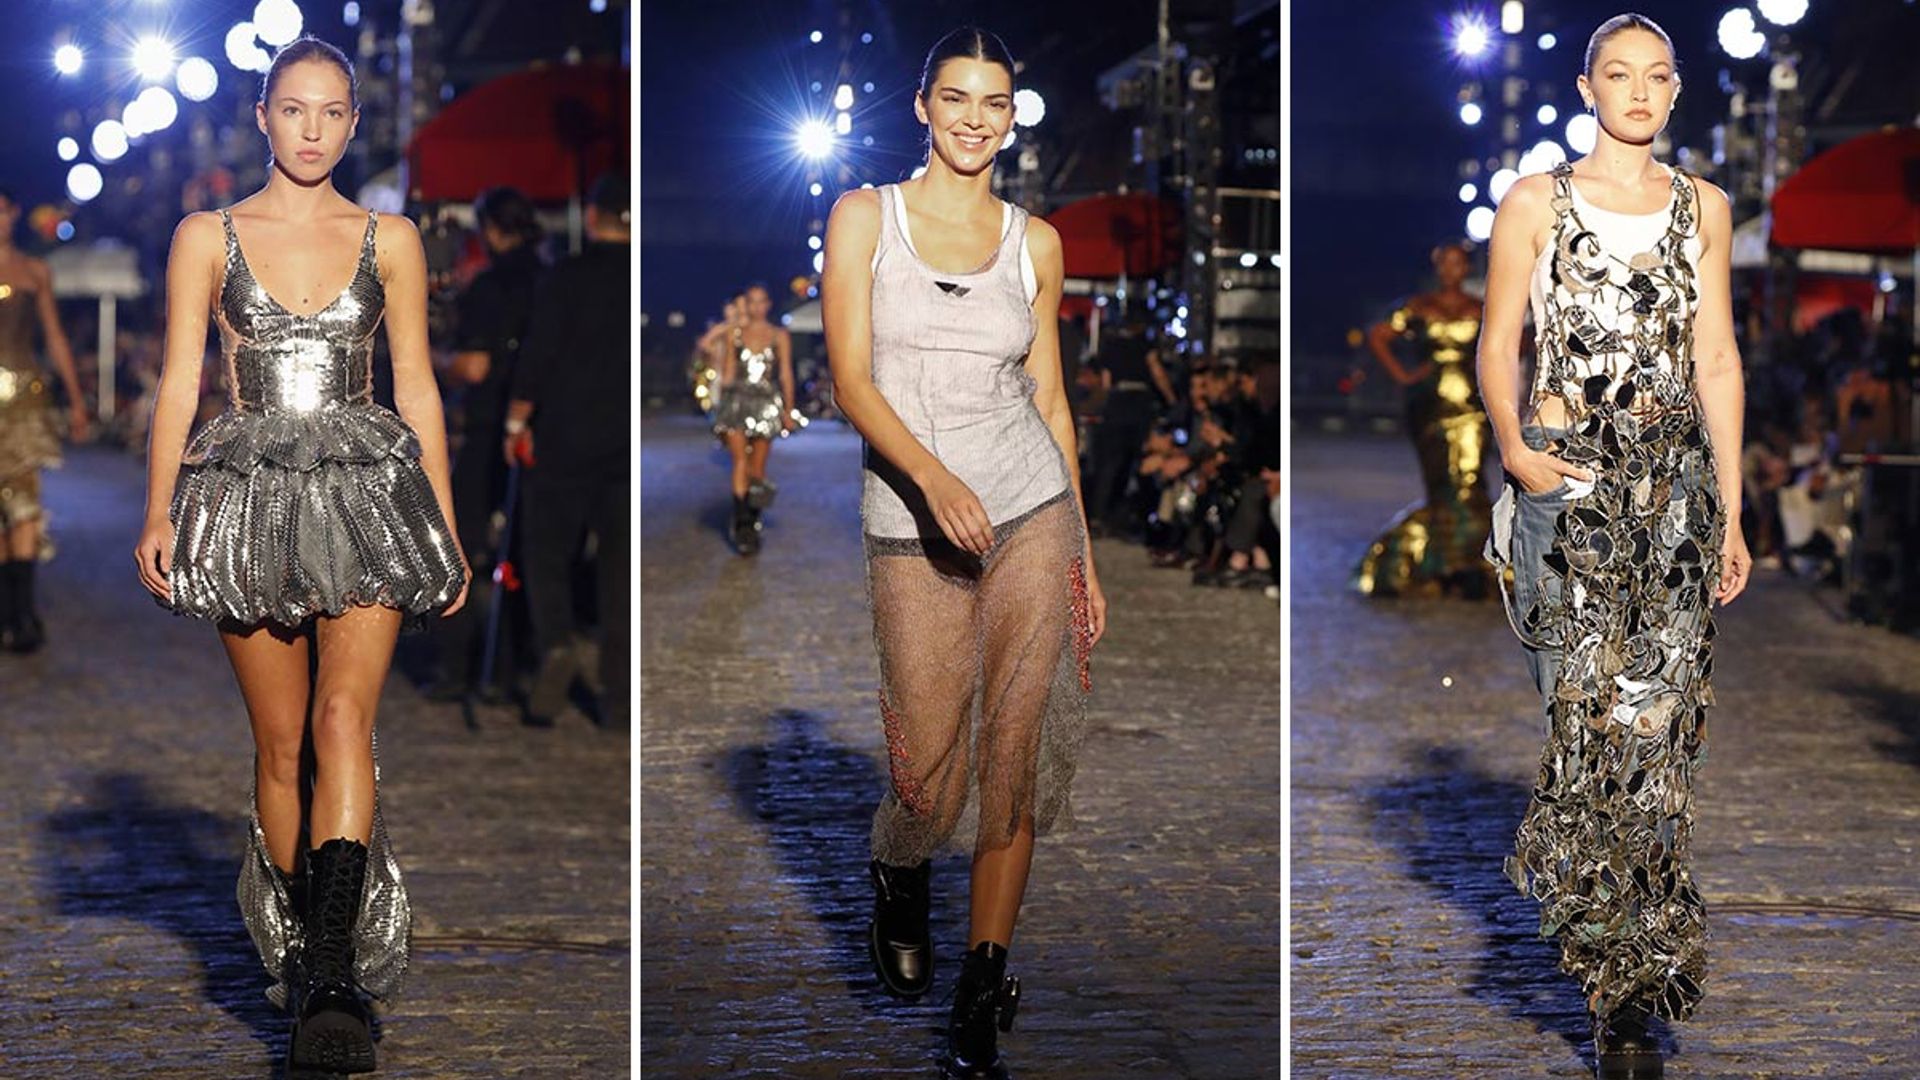 Watch Paris Fashion Week Highlights: Vogue's Anna Wintour on All